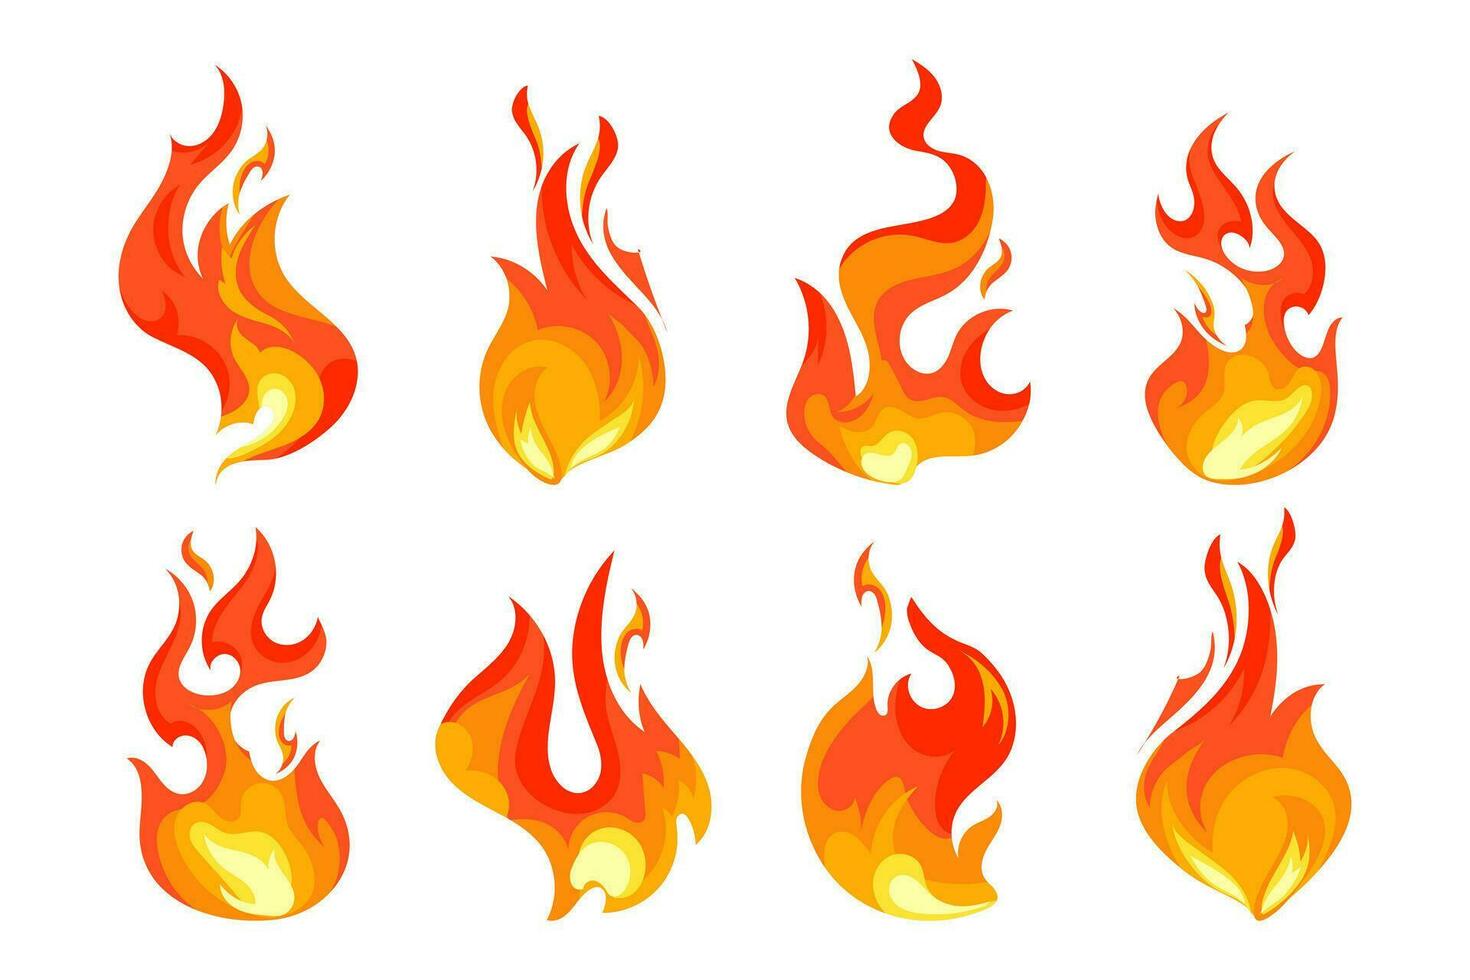 Fire flame, set. Hot flaming elements. Bonfire. Decorative elements. Icons, vector